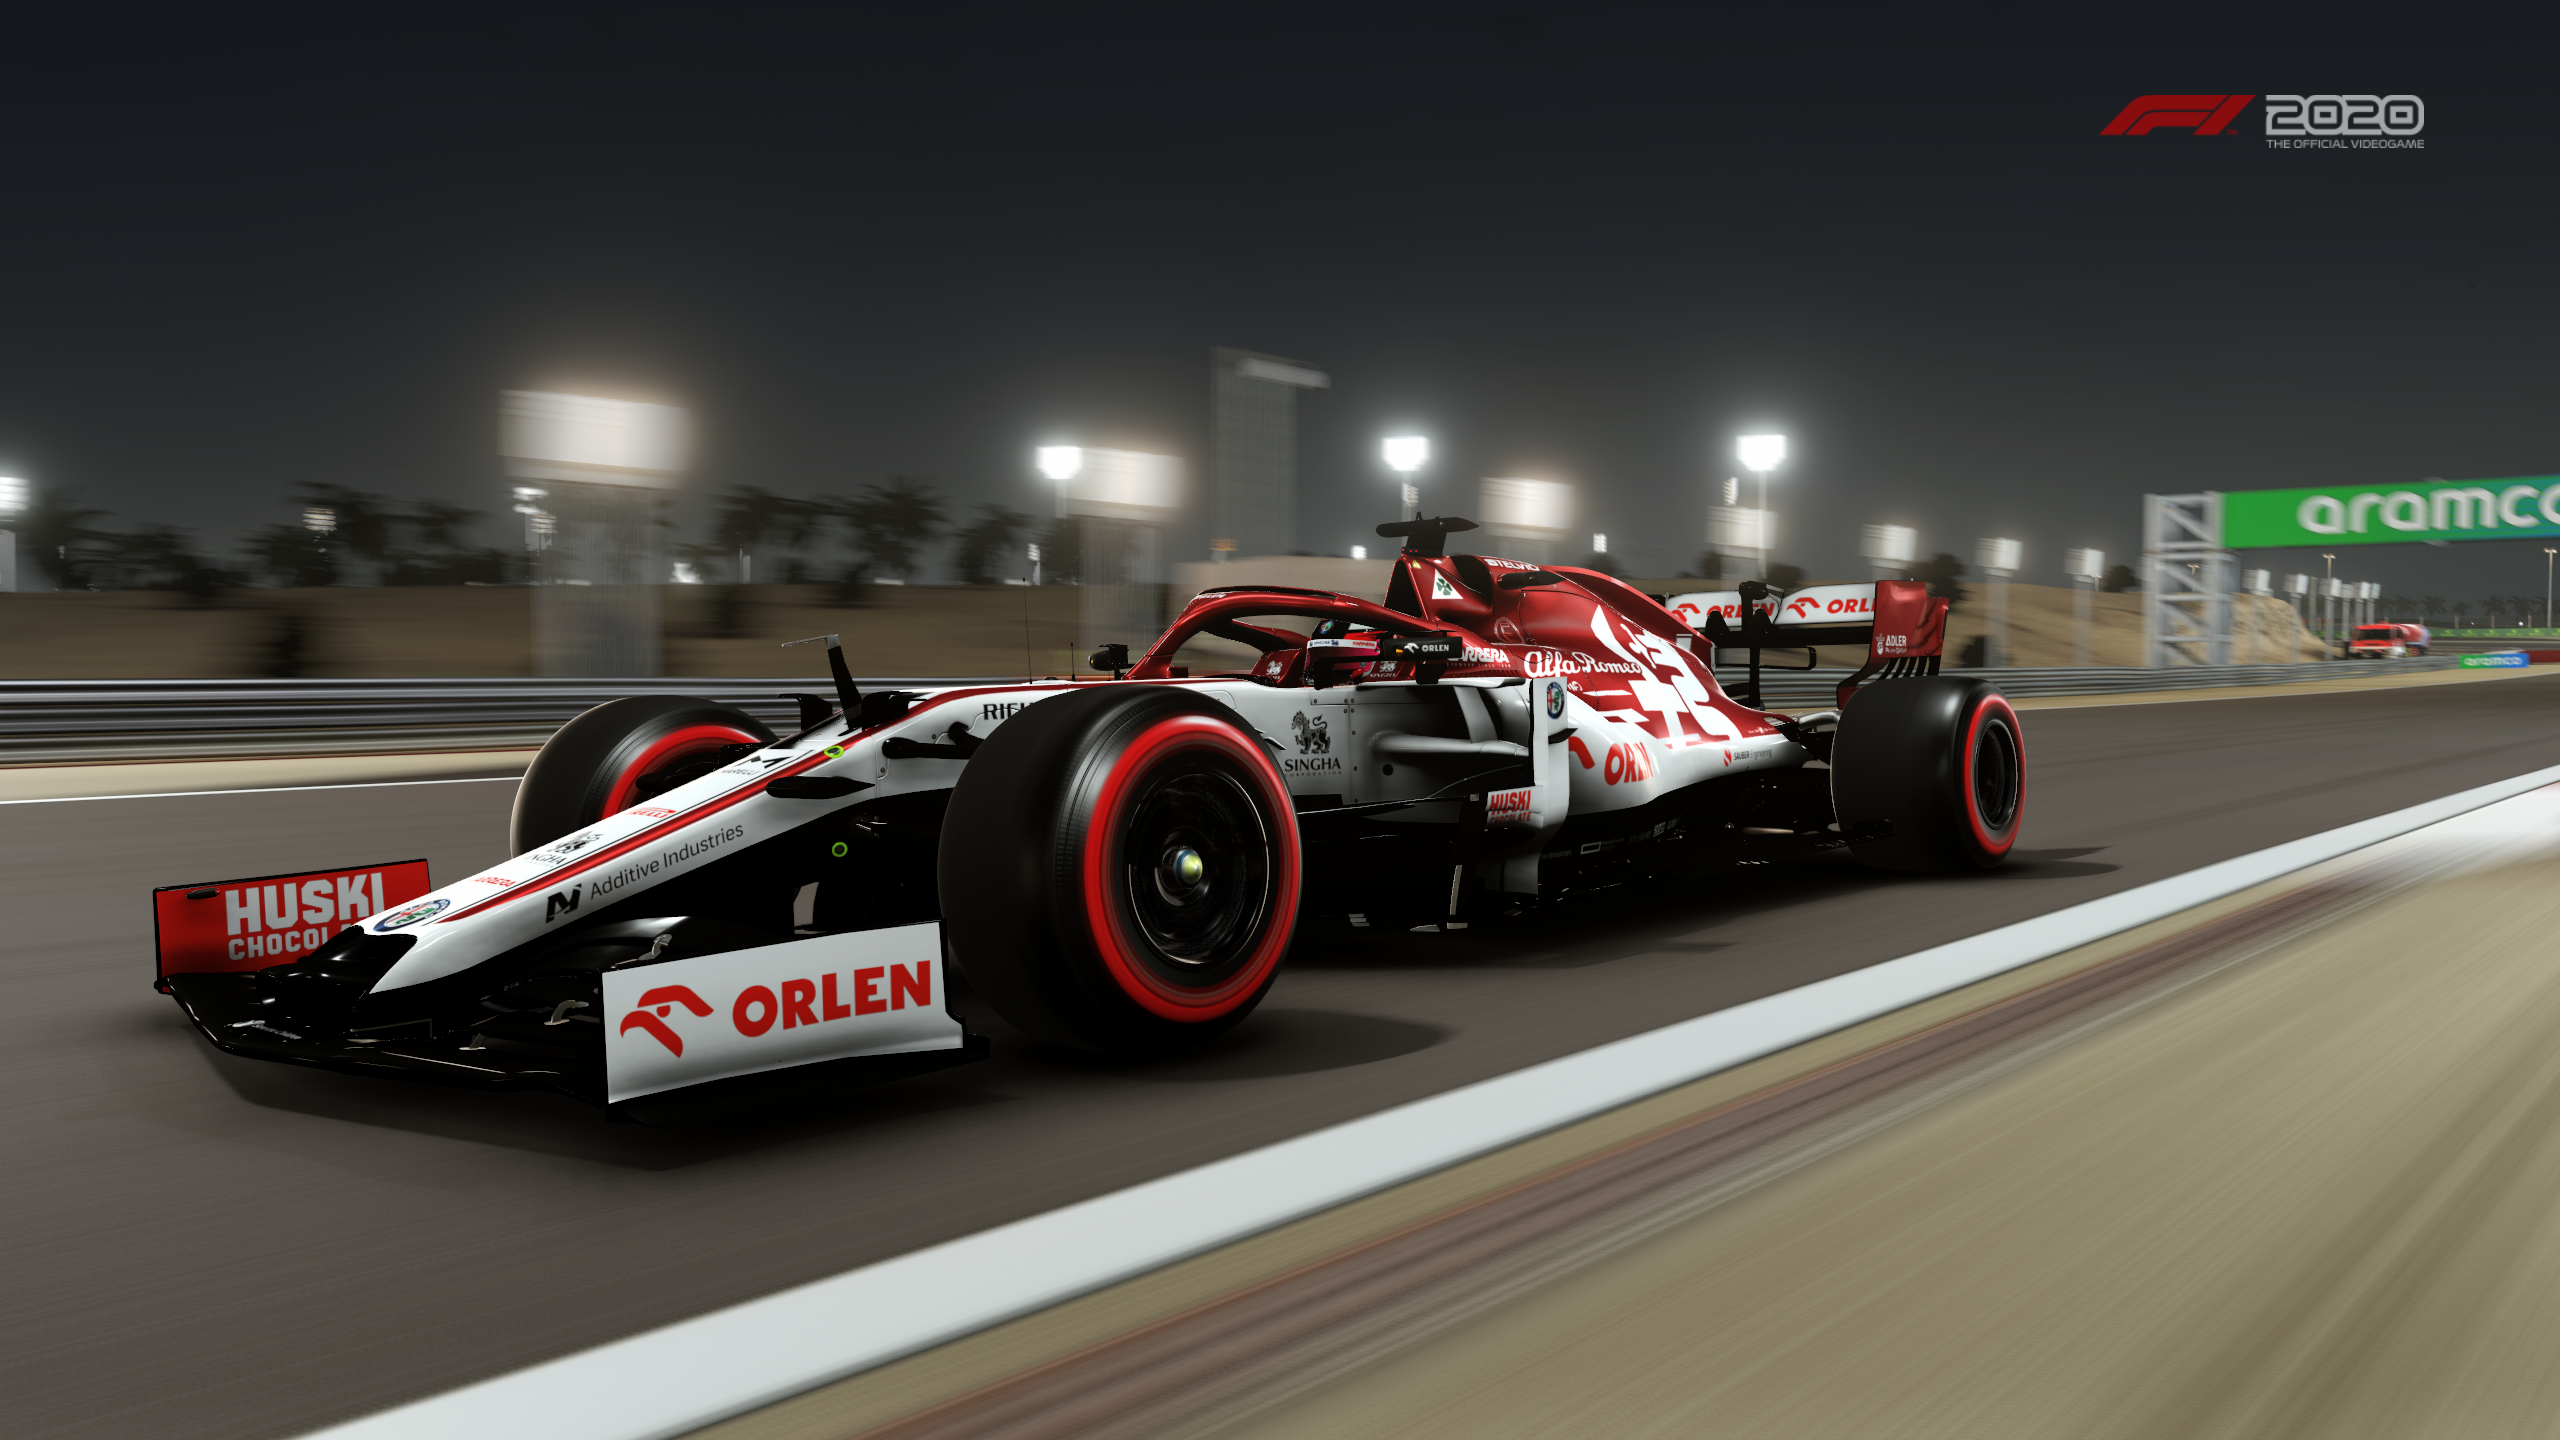 Video Game F1 2020 HD Wallpaper by FLX-II